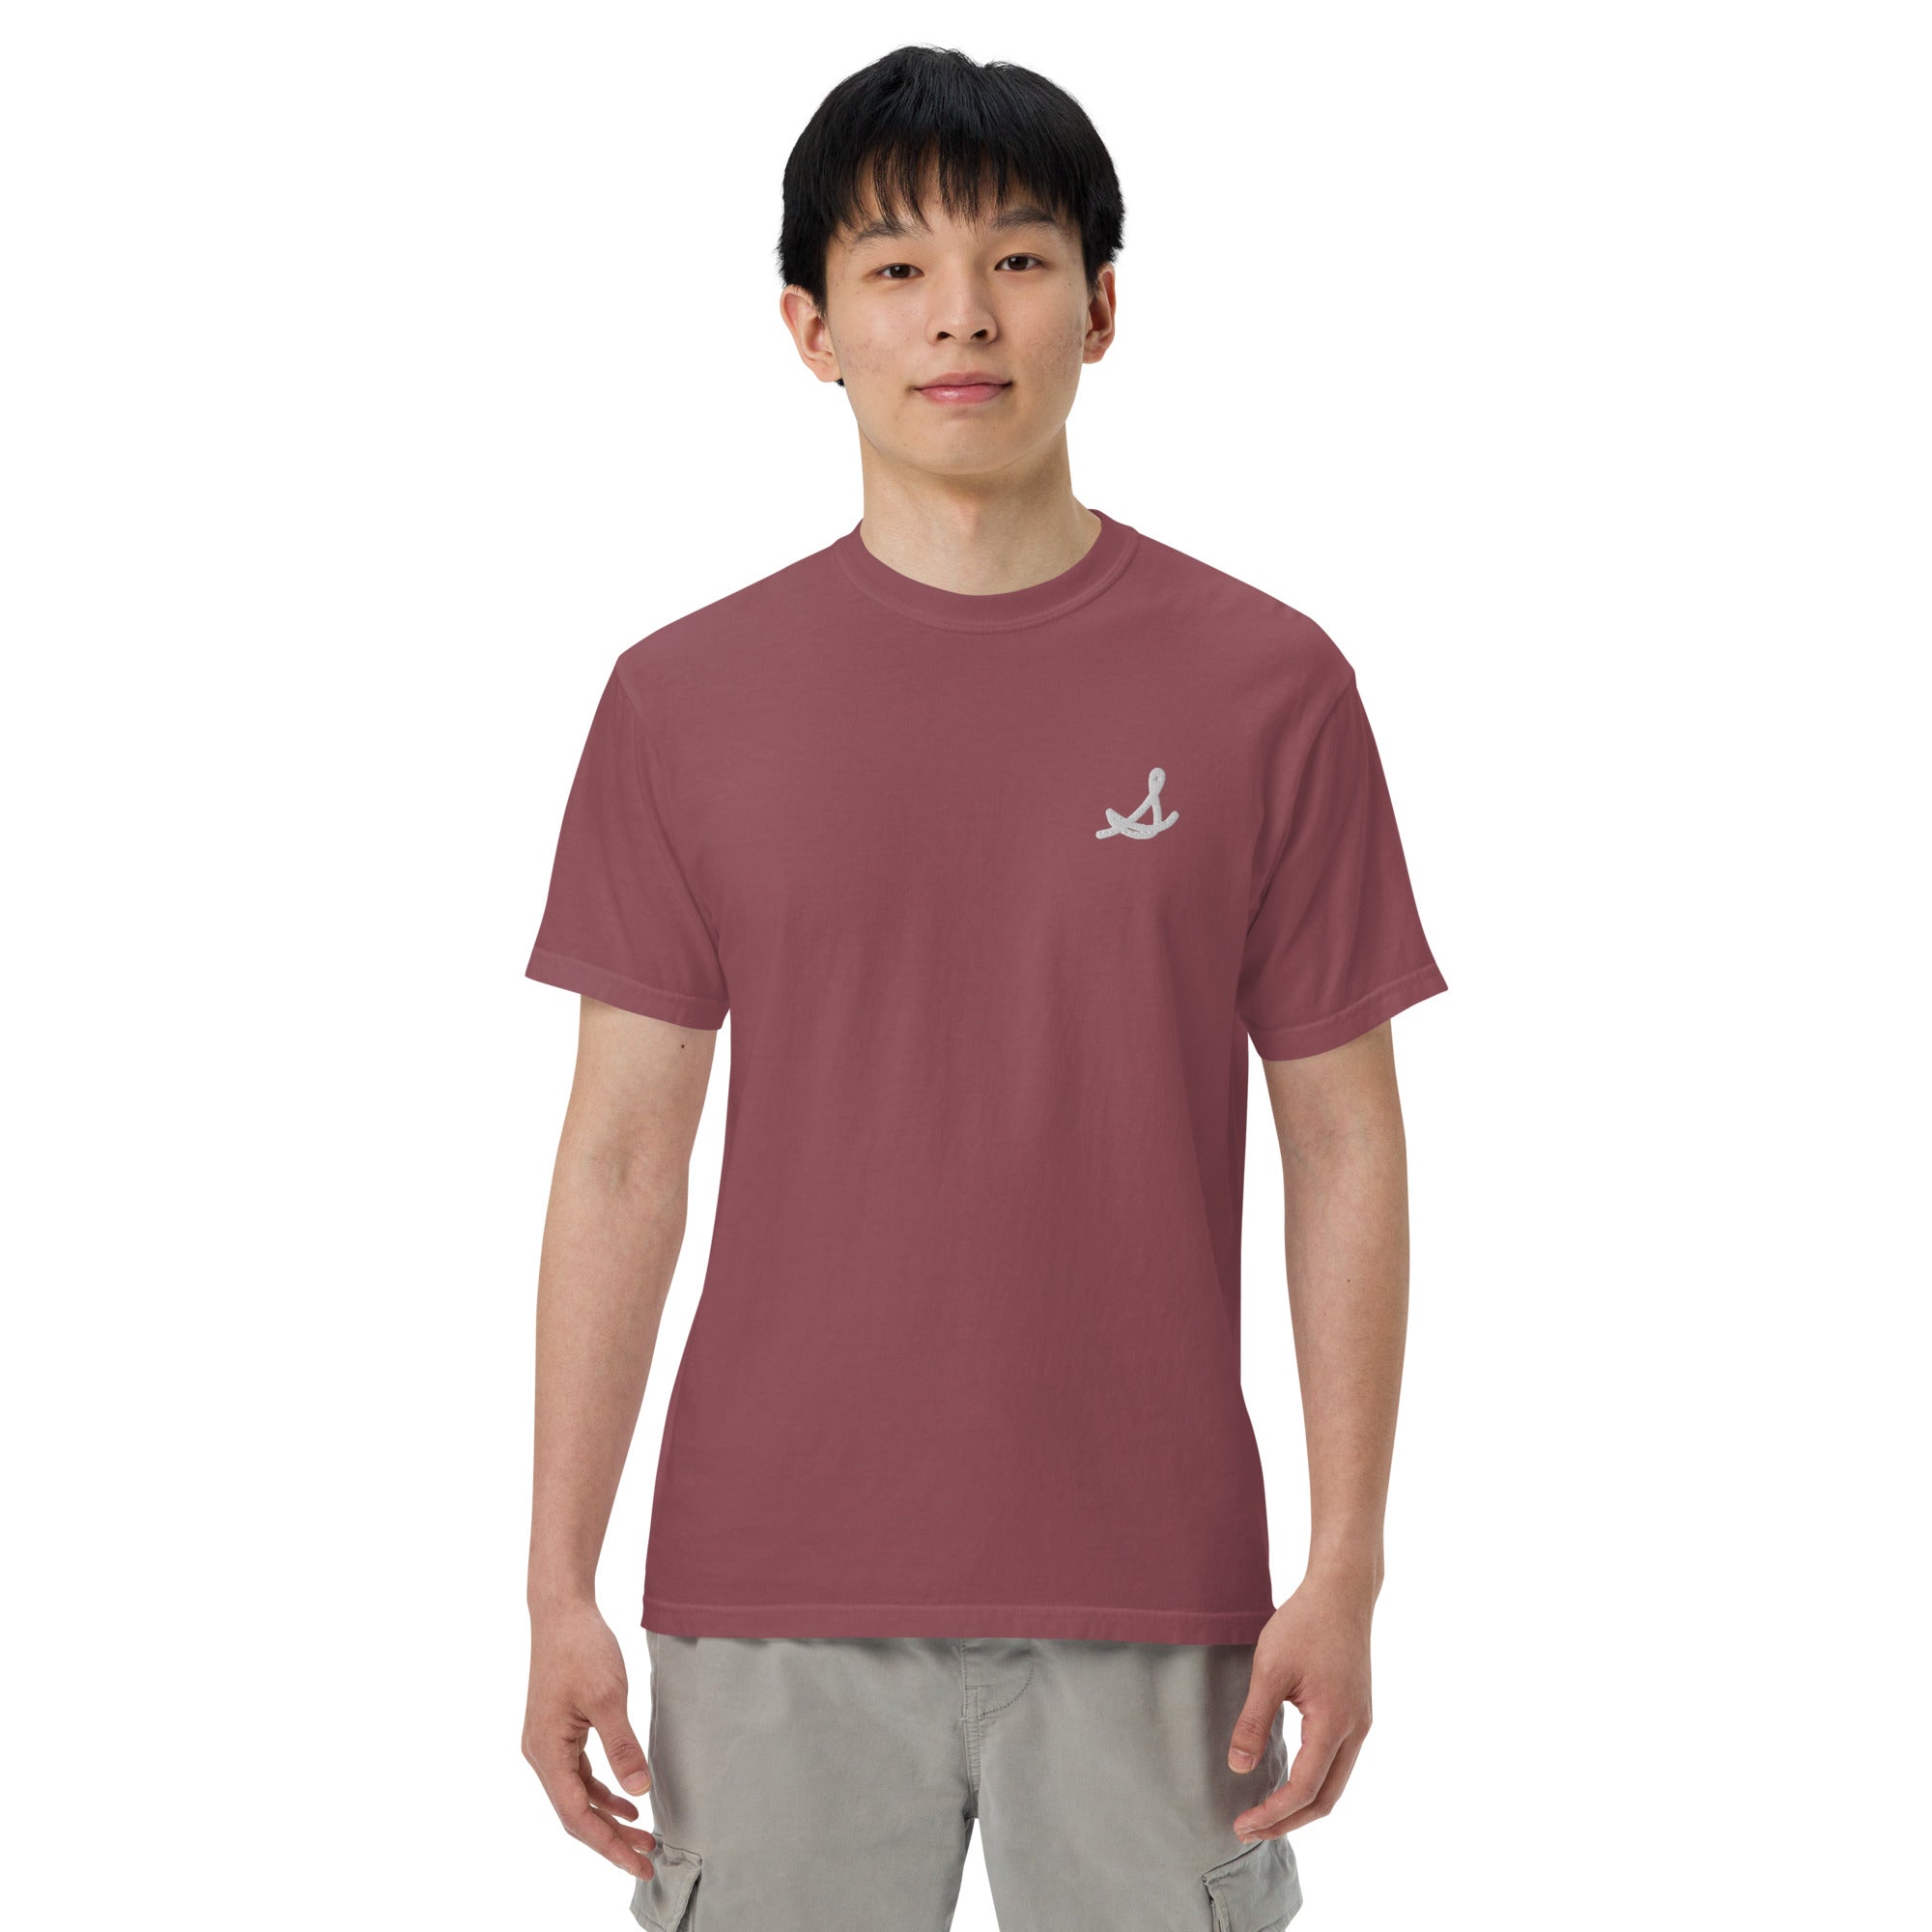 SLVDR Script S Garment-dyed Heavyweight T-shirt